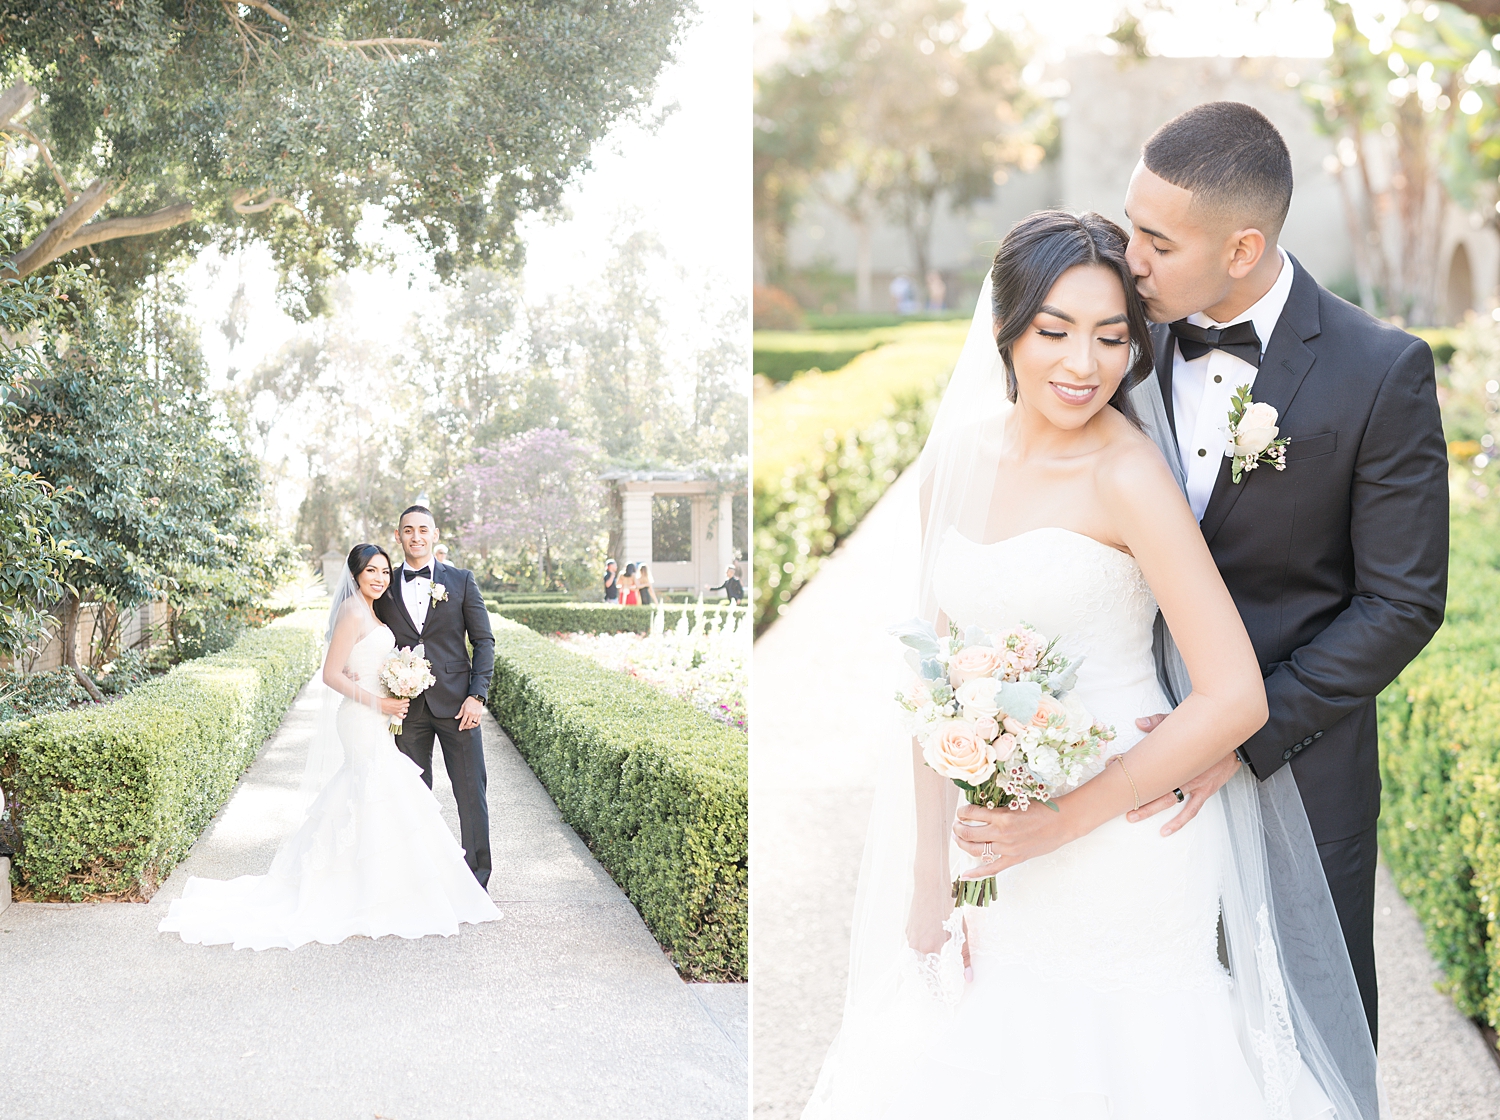 Romantic Balboa Park Wedding / Elegant Wedding / San Diego Bride 